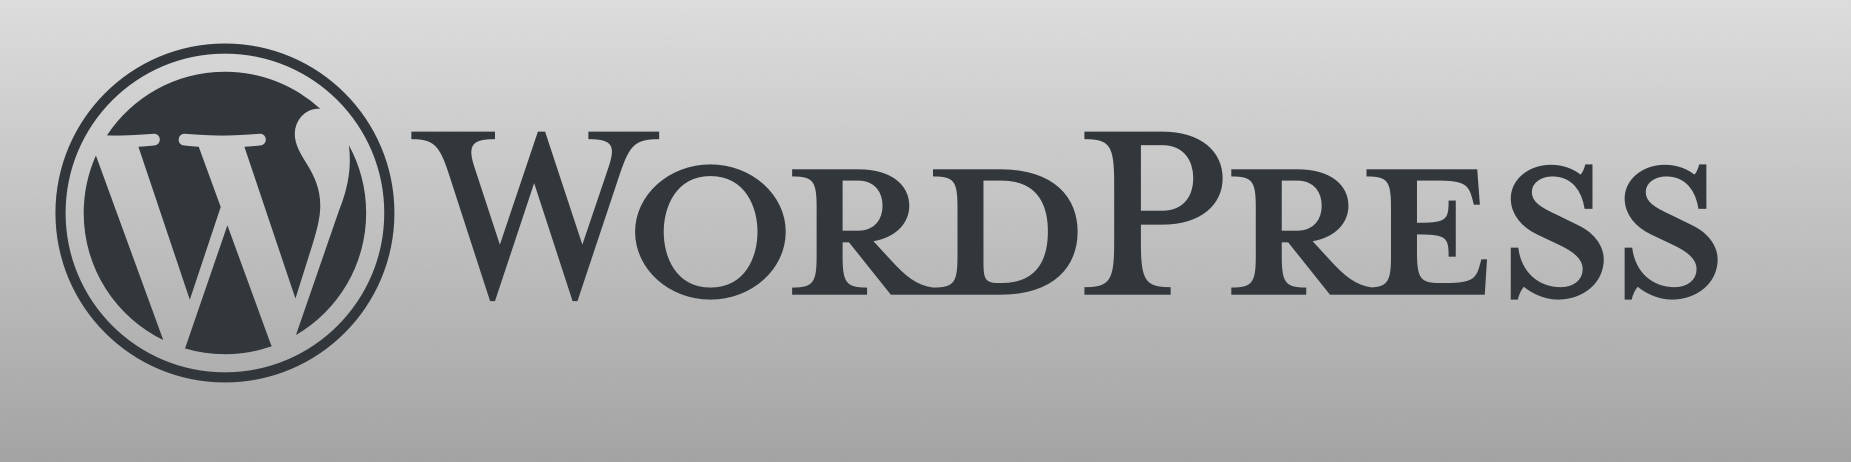 WordPress logo type standard gray